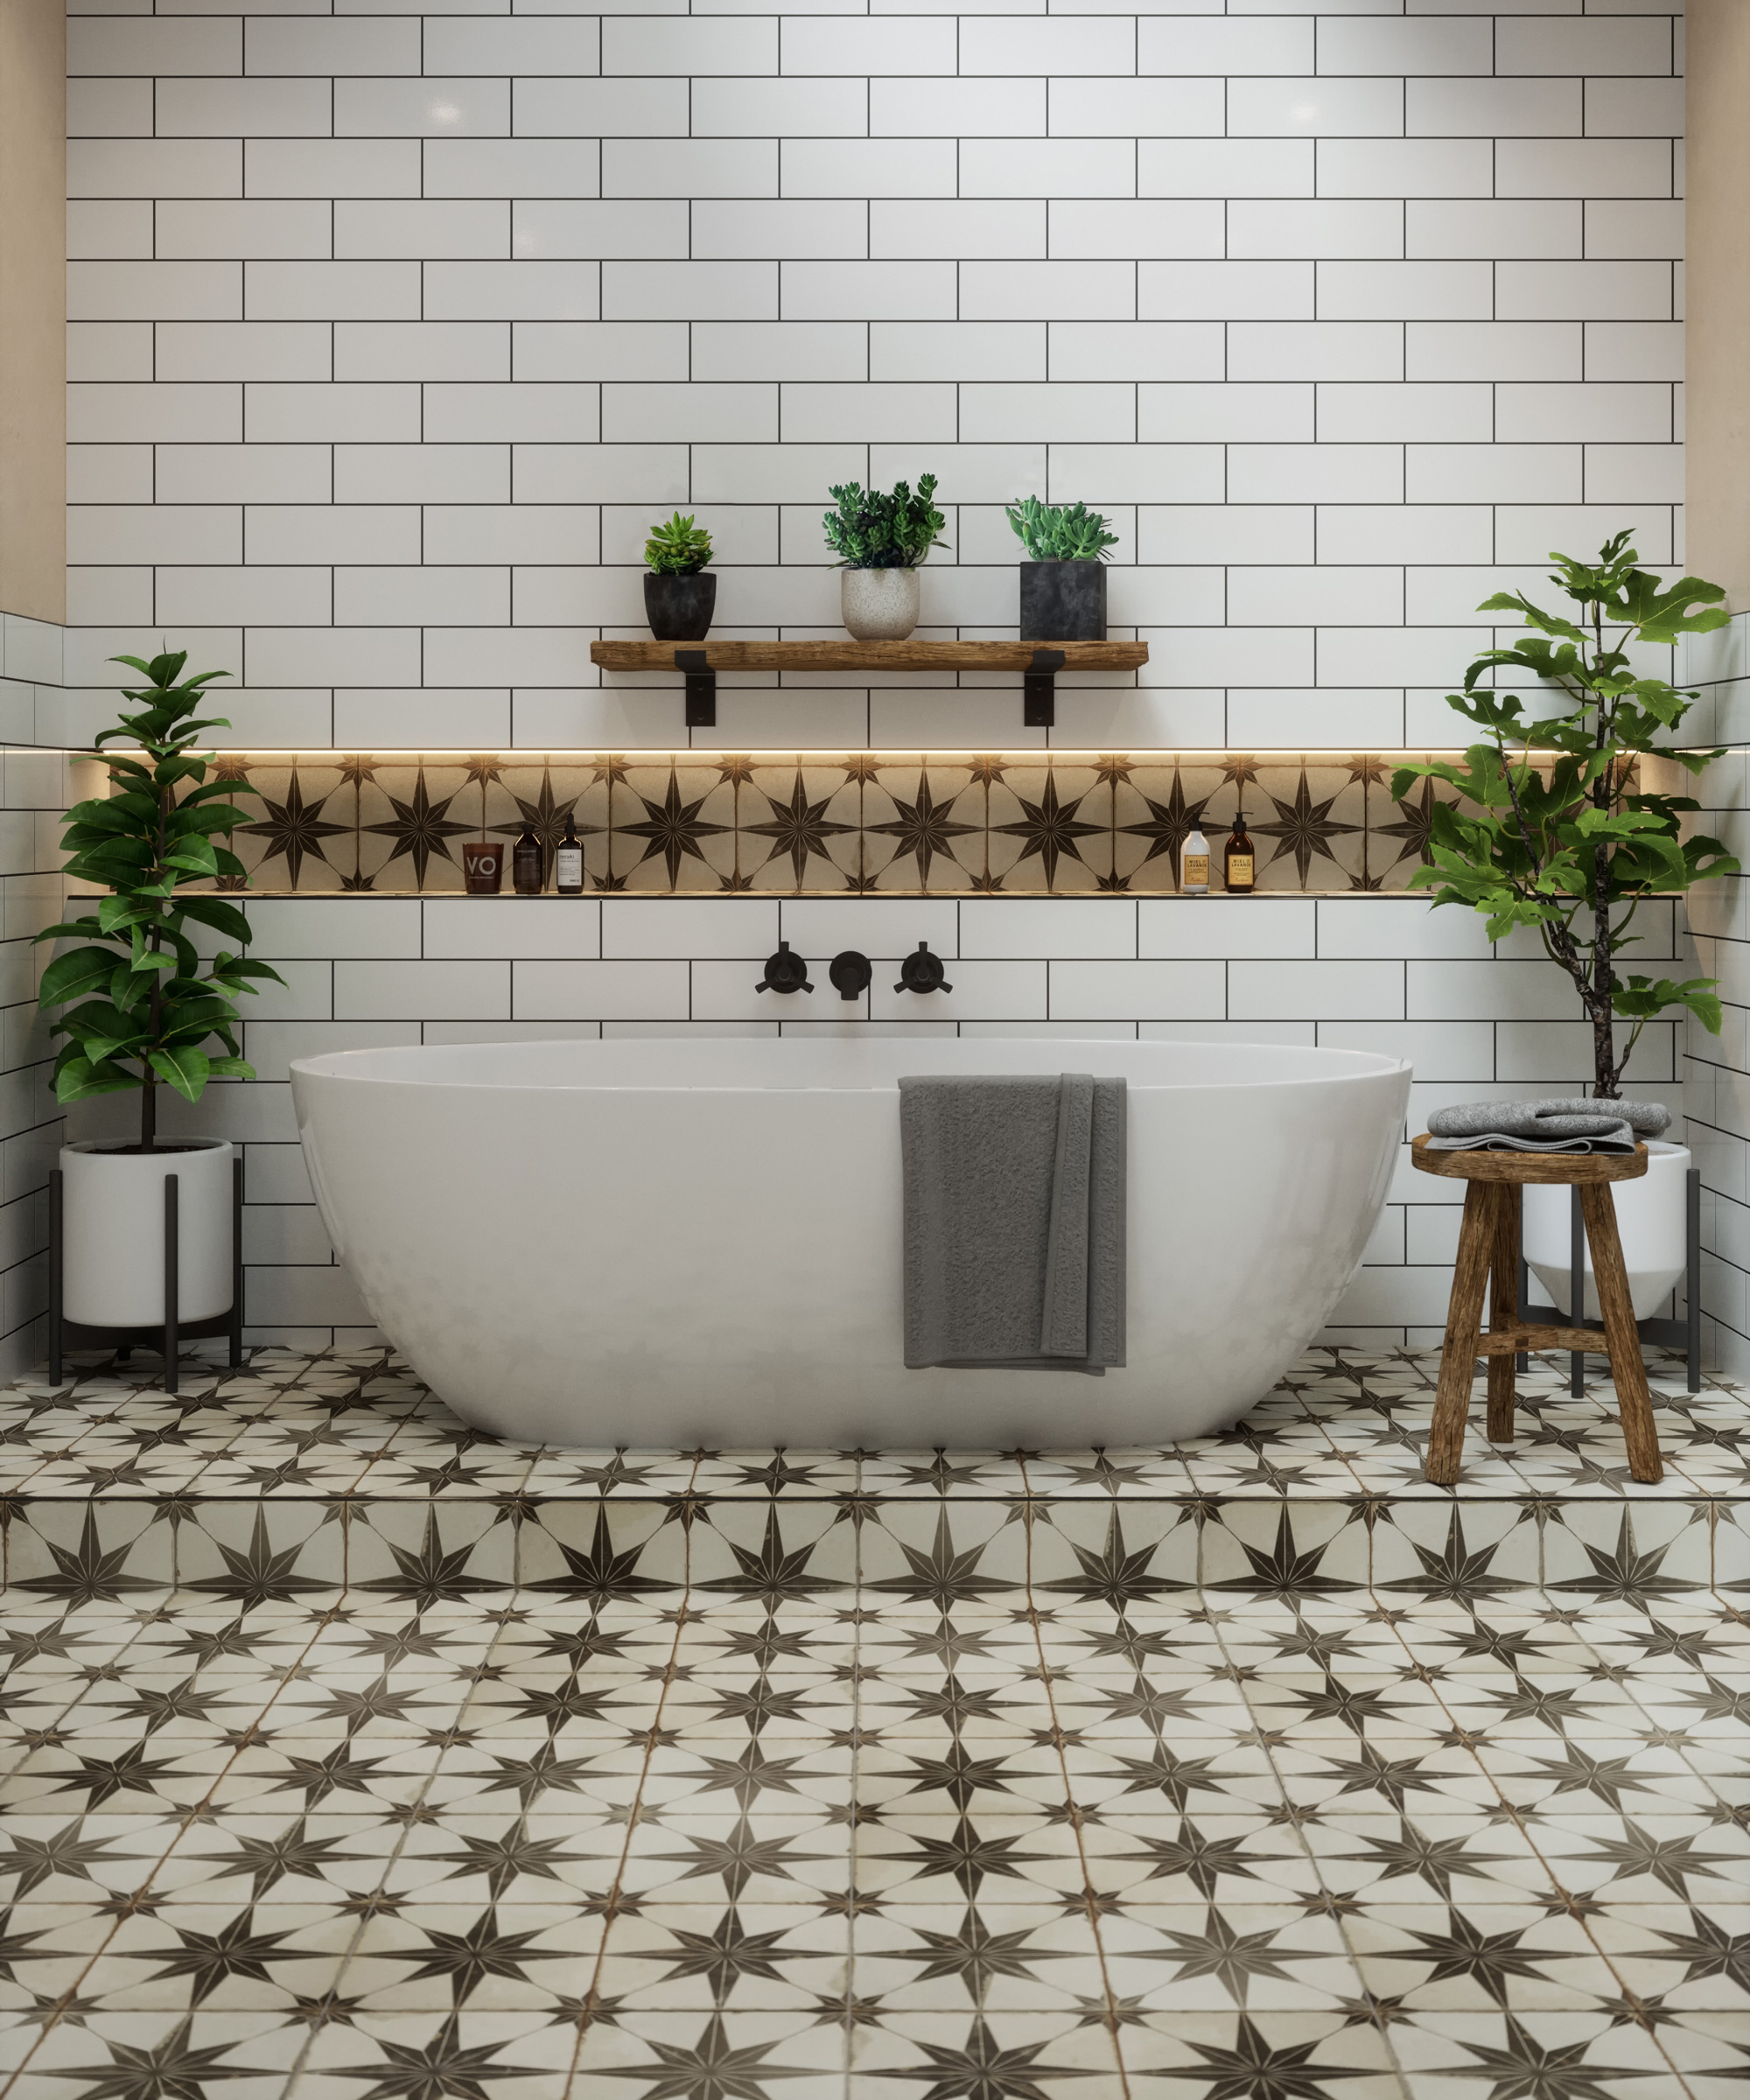 Bathroom Tile Ideas 32 New Looks To, Images Of Bathroom Tile